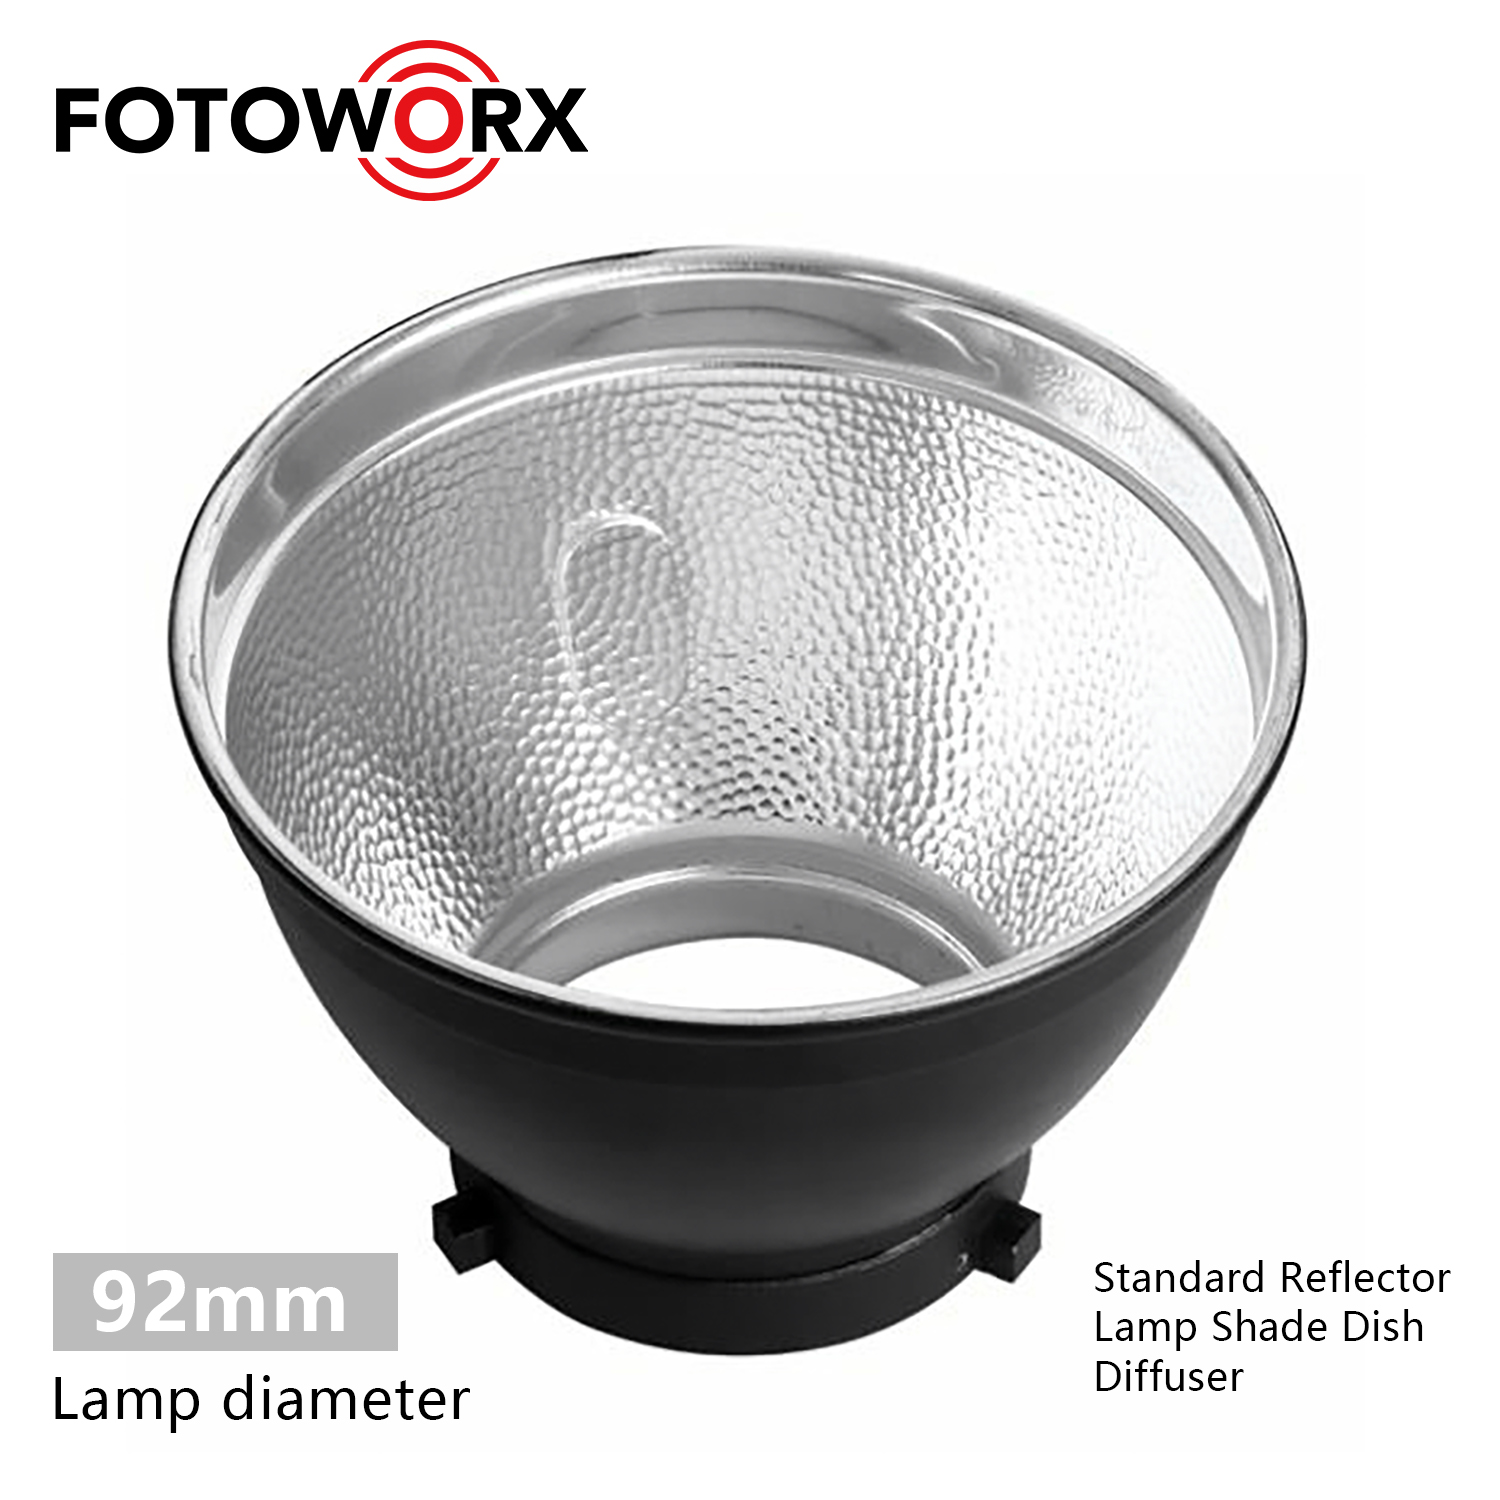 Standard Reflector Lamp Shade Dish Diffuser for studio Strobe Flash Light